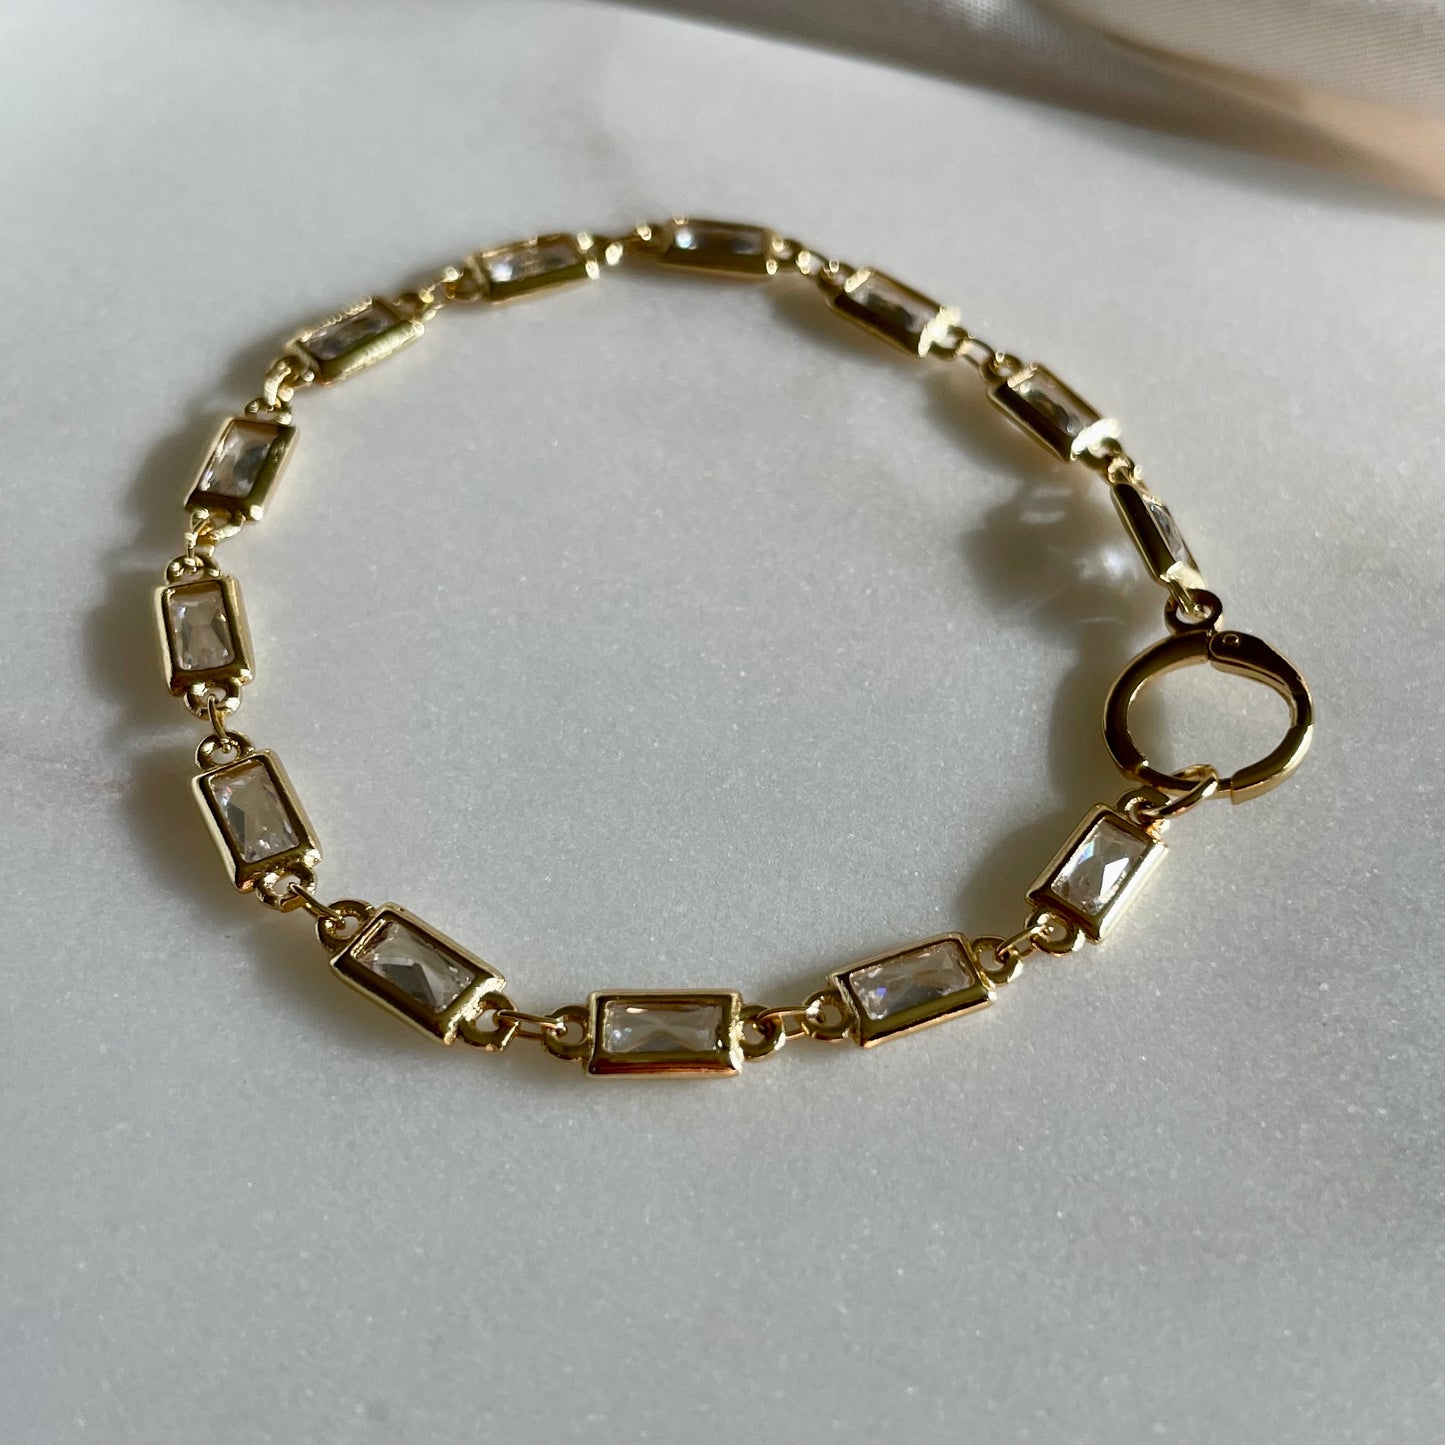 Bad Habits Bracelet. 24K Gold Filled CZ Bezel Chain Bracelet